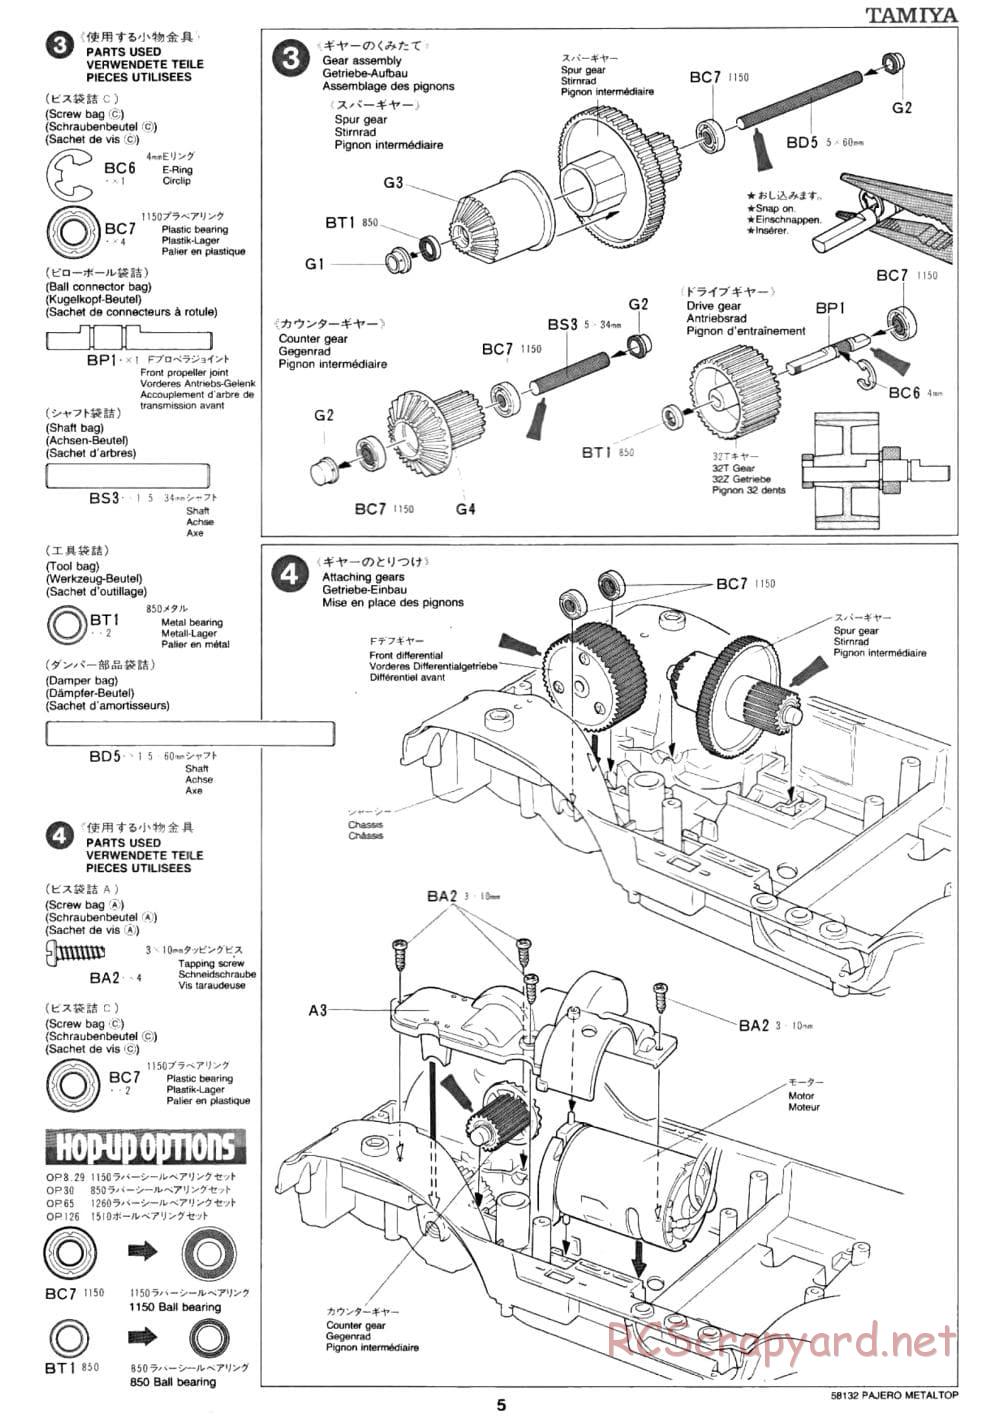 Tamiya - Mitsubishi Pajero Metaltop Wide - CC-01 Chassis - Manual - Page 5